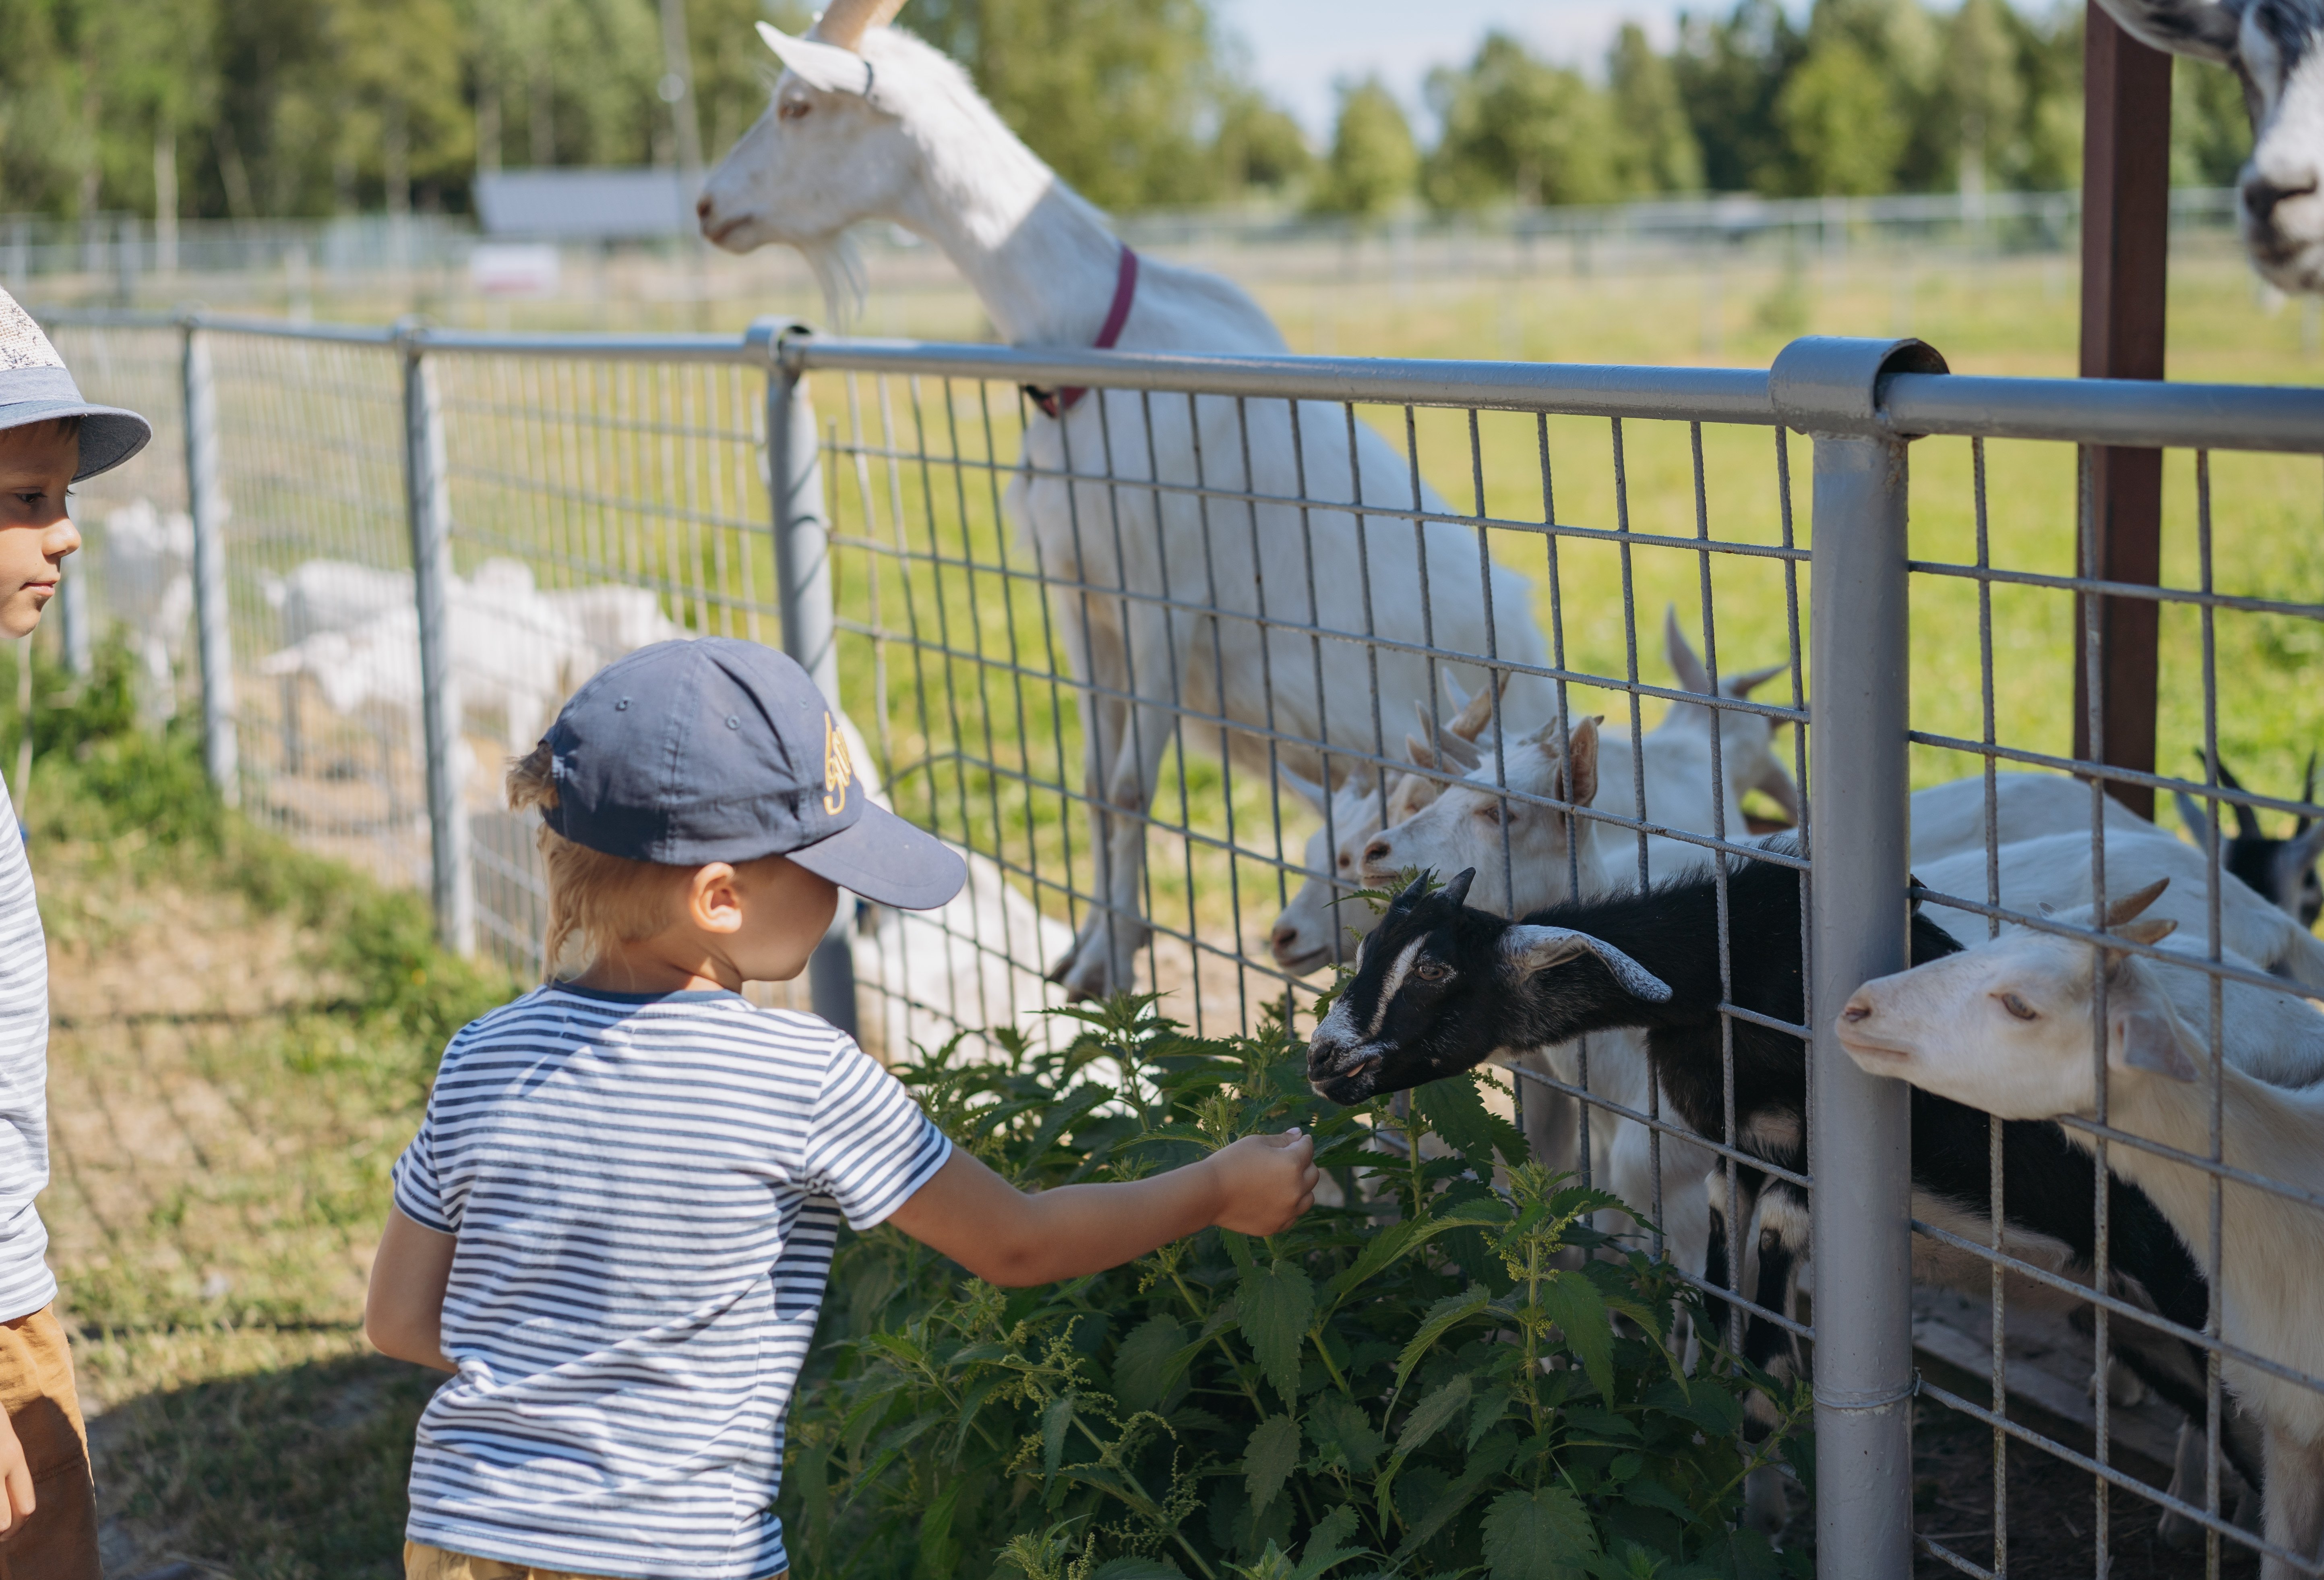 children-feeding-baby-goats-in-zoo-2022-11-10-09-24-43-utc